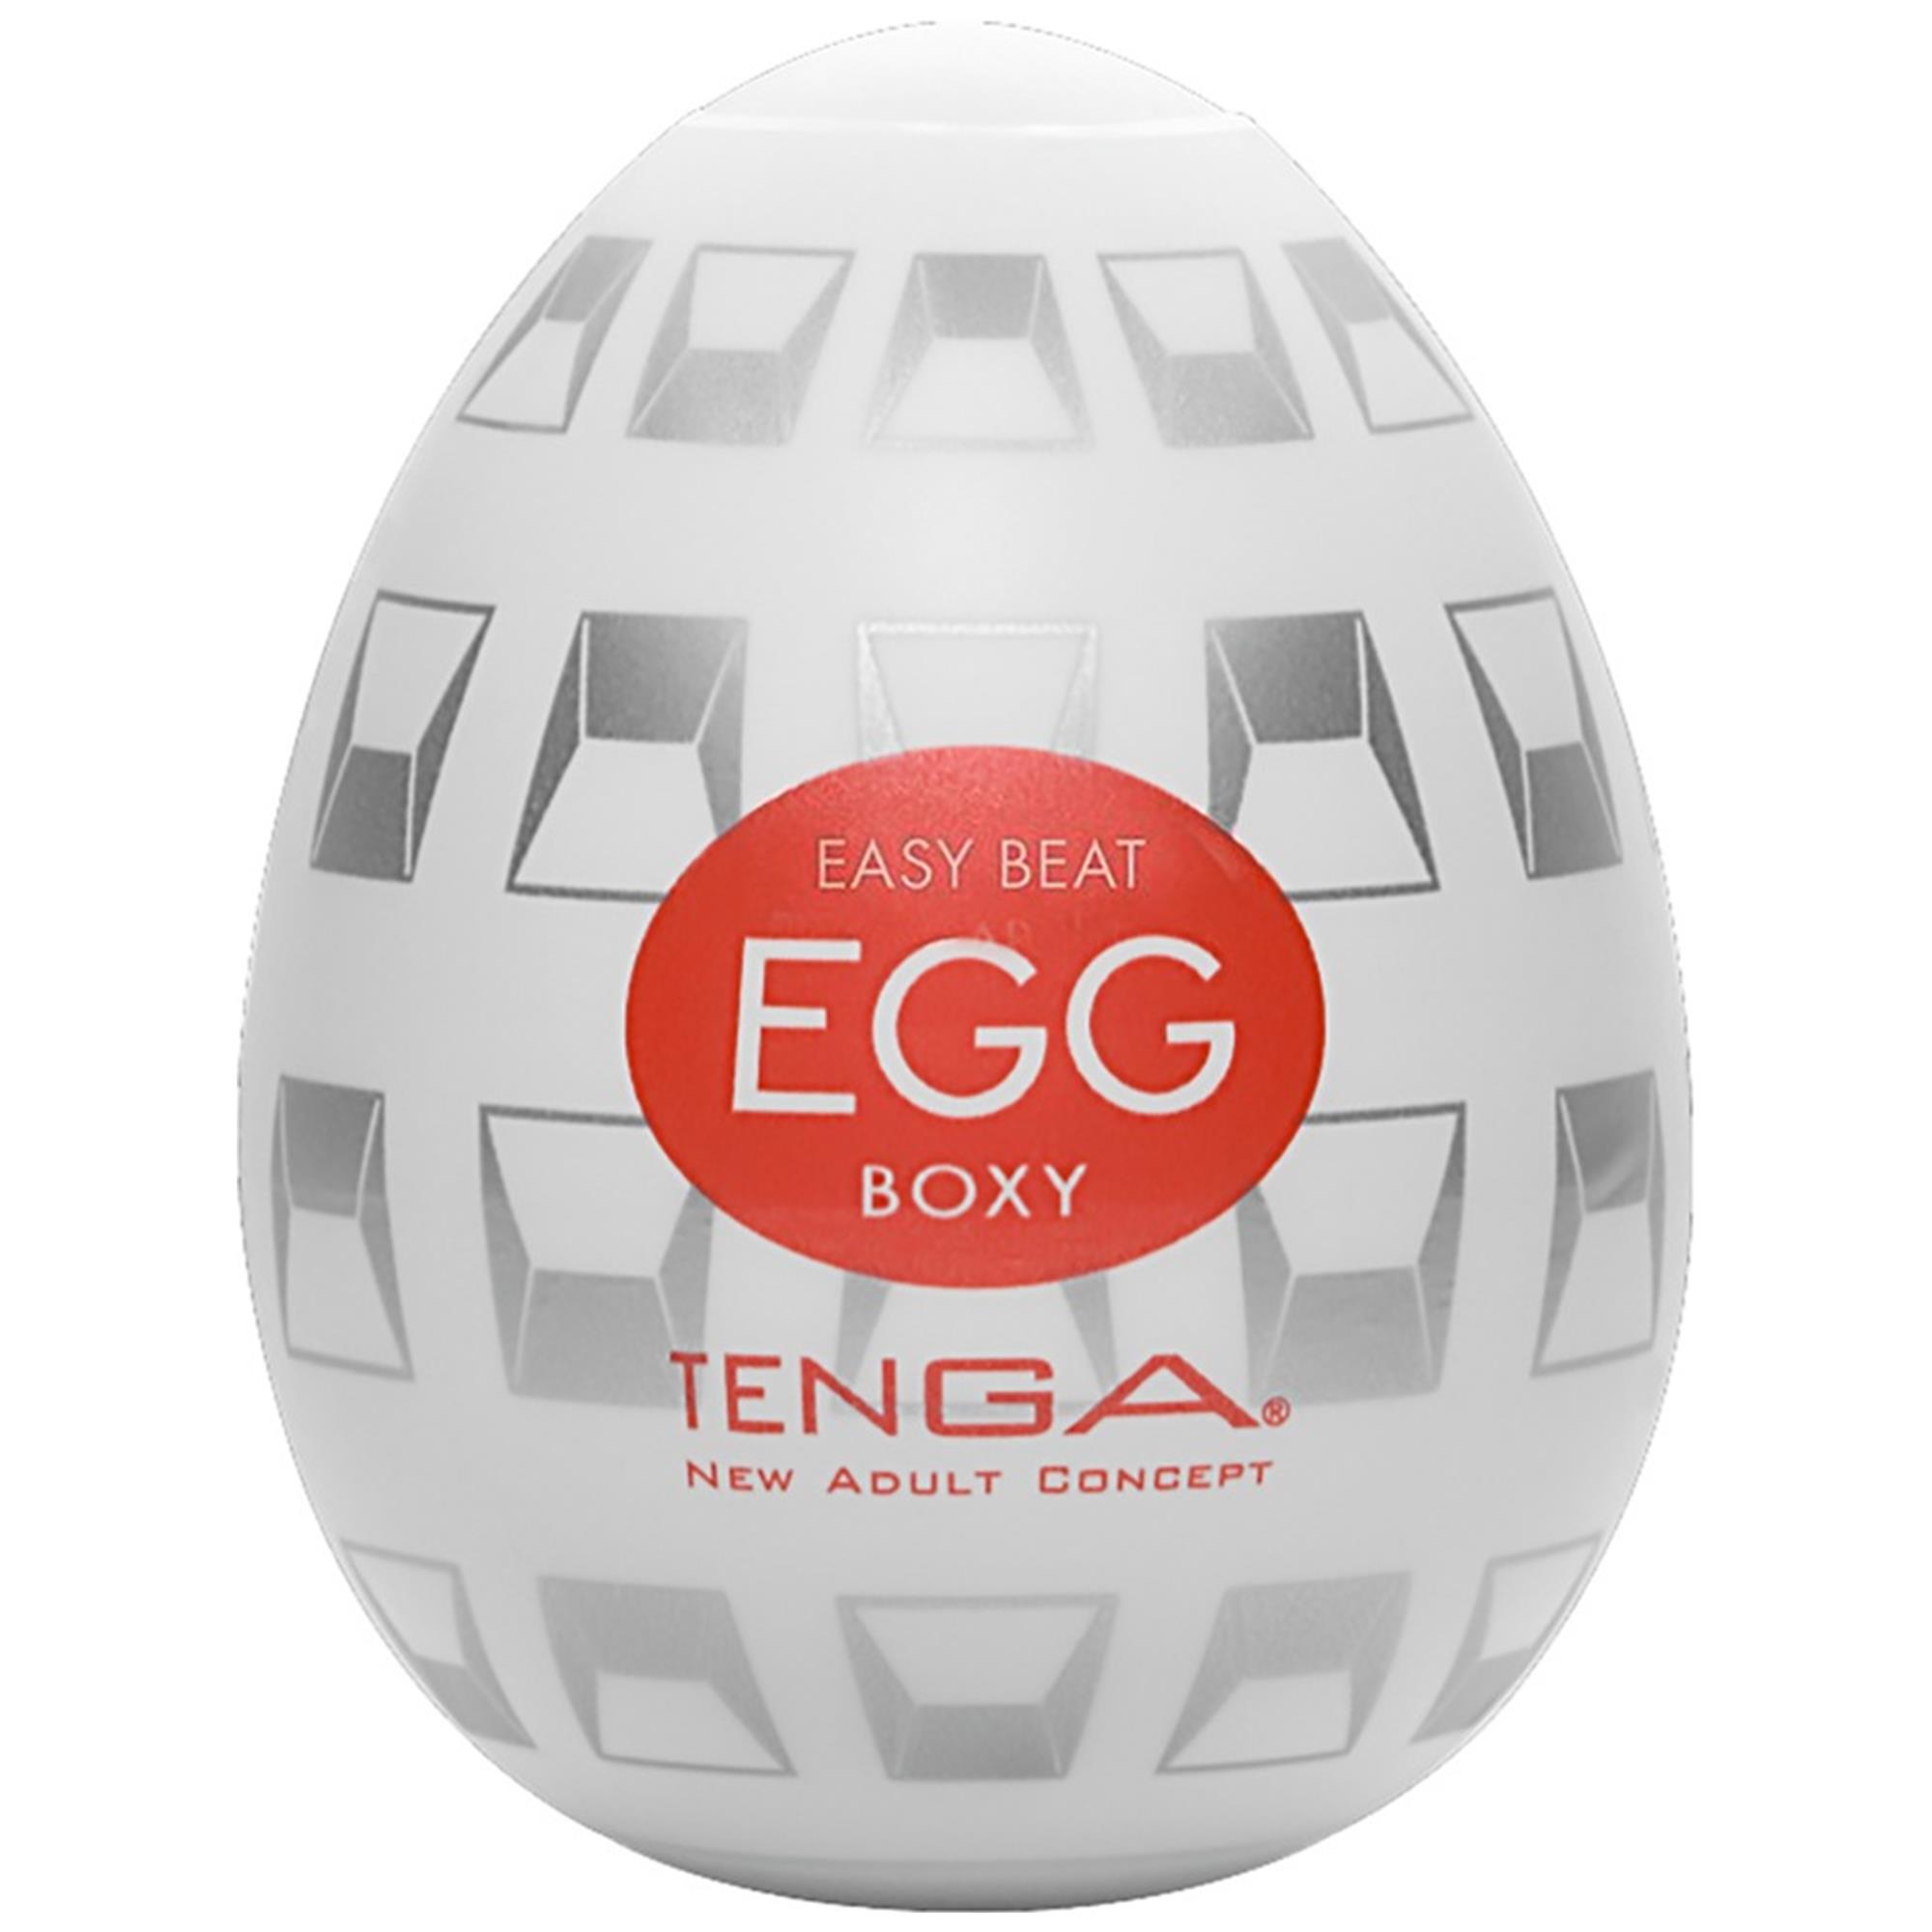 Tenga Egg Boxy | Lösvagina | Intimast